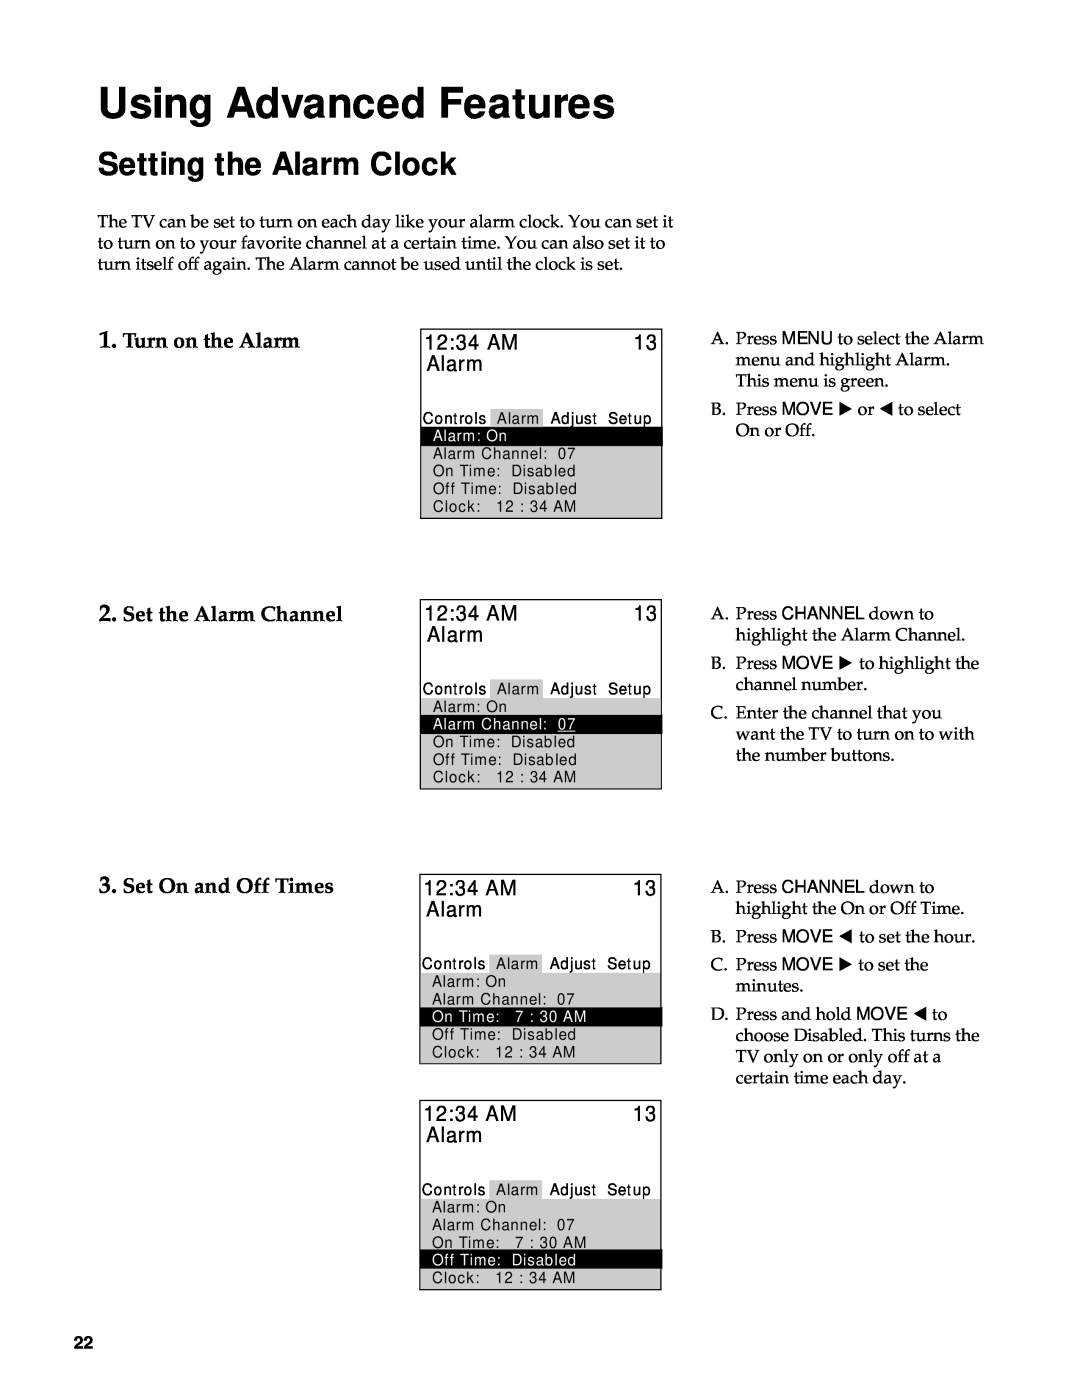 RCA Color TV manual Setting the Alarm Clock, Turn on the Alarm, 1234 AM, Set the Alarm Channel, Set On and Off Times 